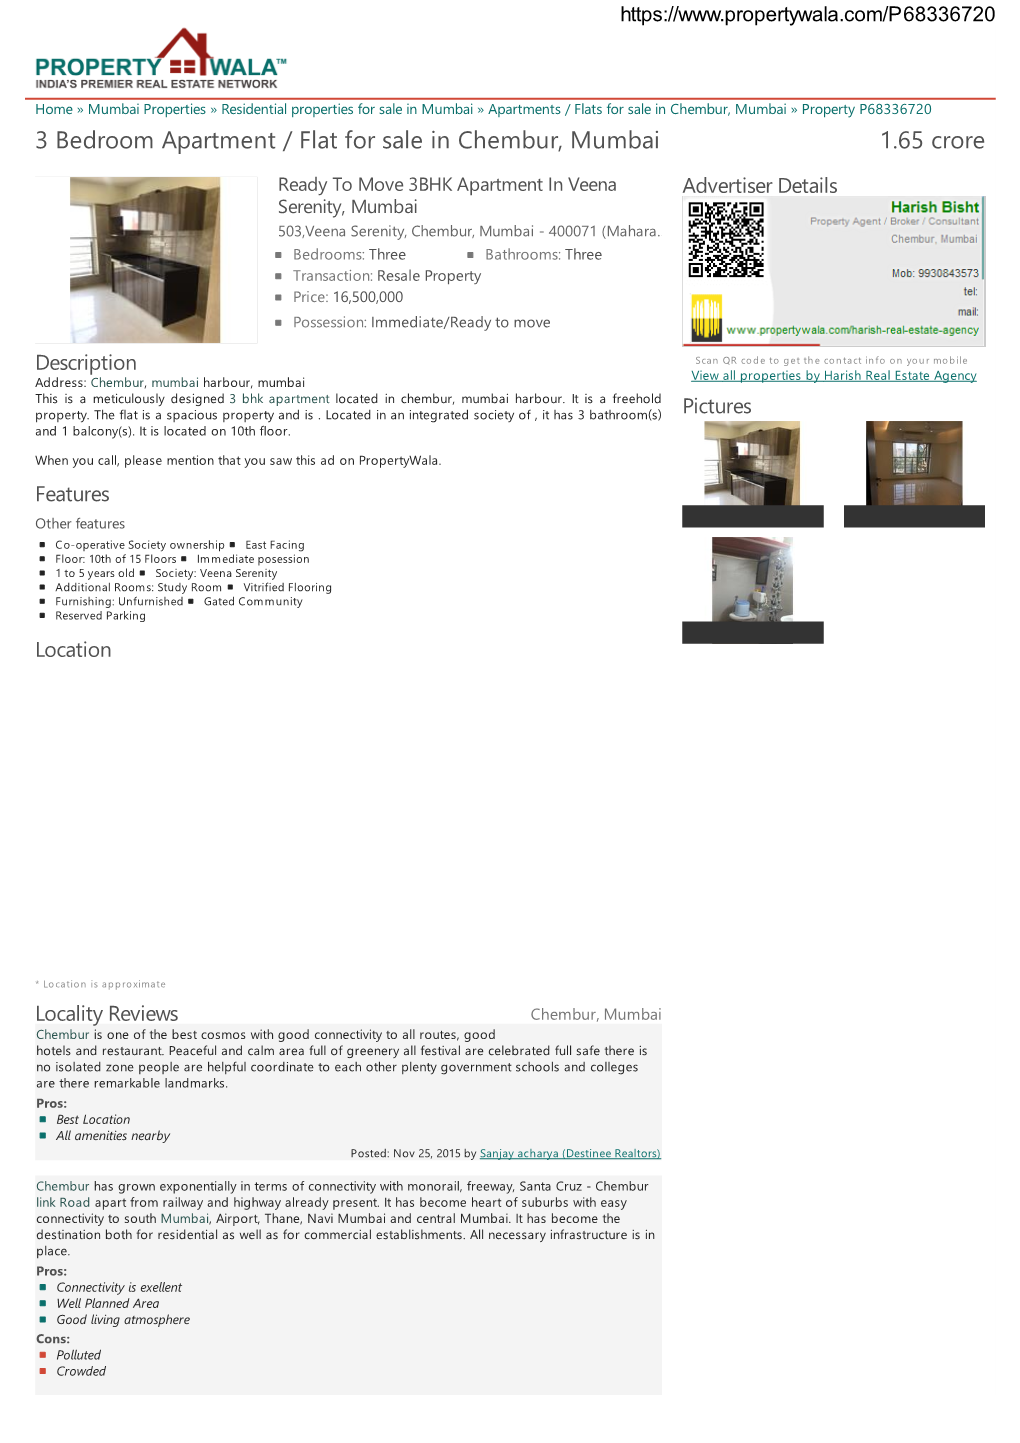 3 Bedroom Apartment / Flat for Sale in Chembur, Mumbai (P68336720